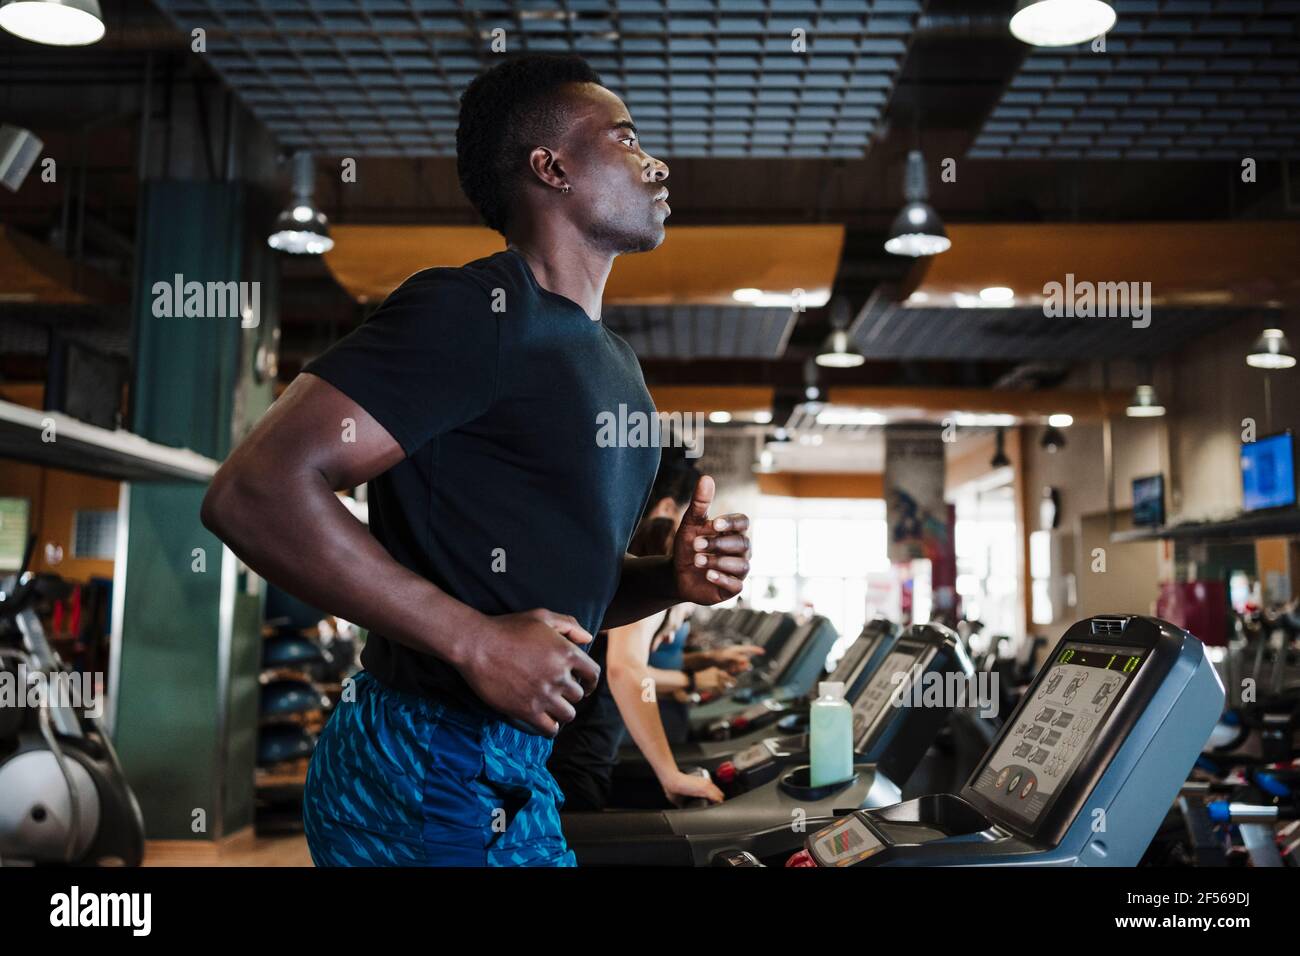 Man running on treadmill in gym Stock Photo